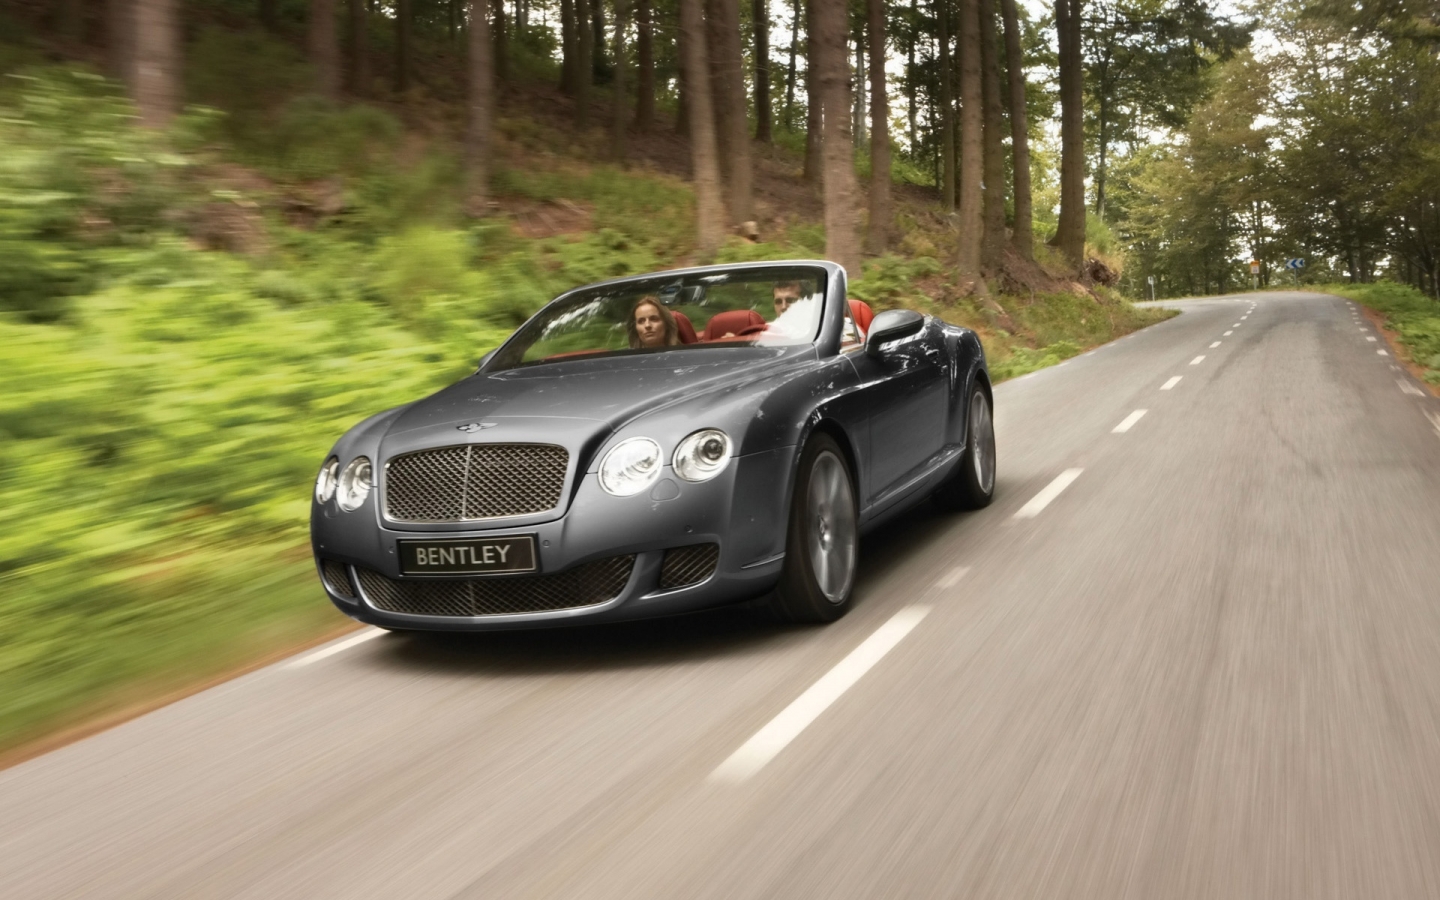 Bentley Continental GTC Speed 2009 for 1440 x 900 widescreen resolution